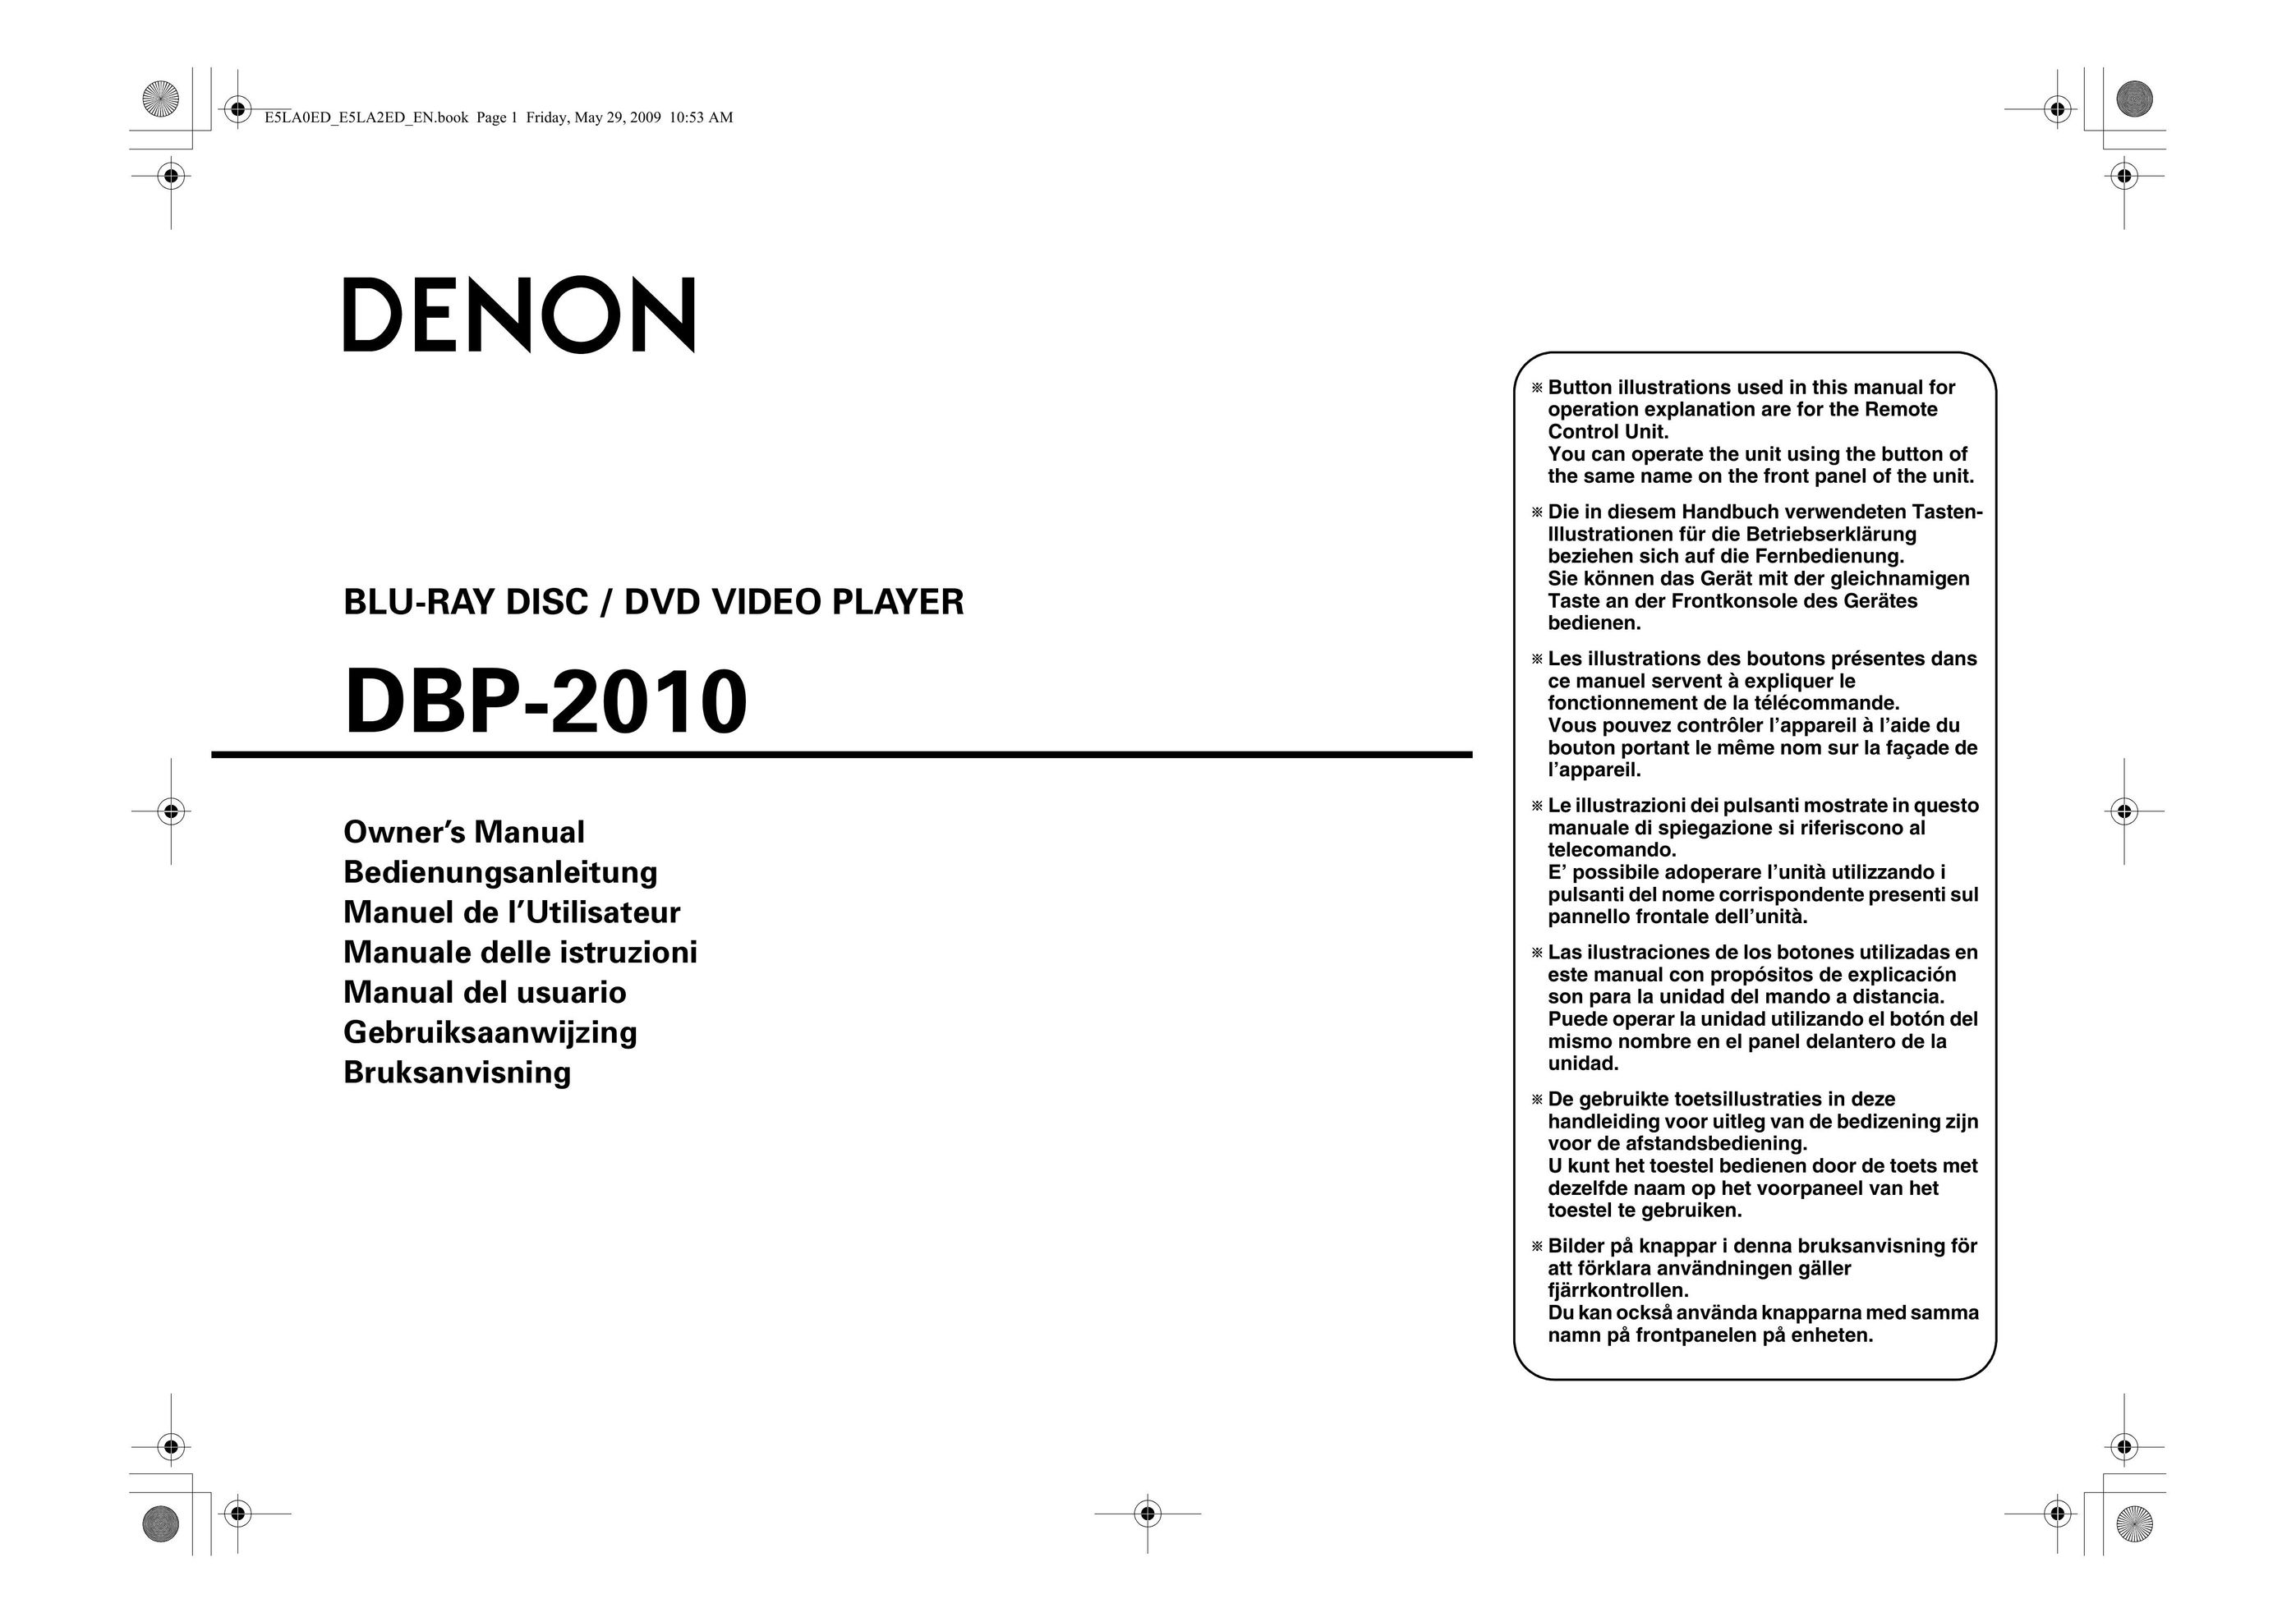 Denon DBP-2010 Blu-ray Player User Manual (Page 1)